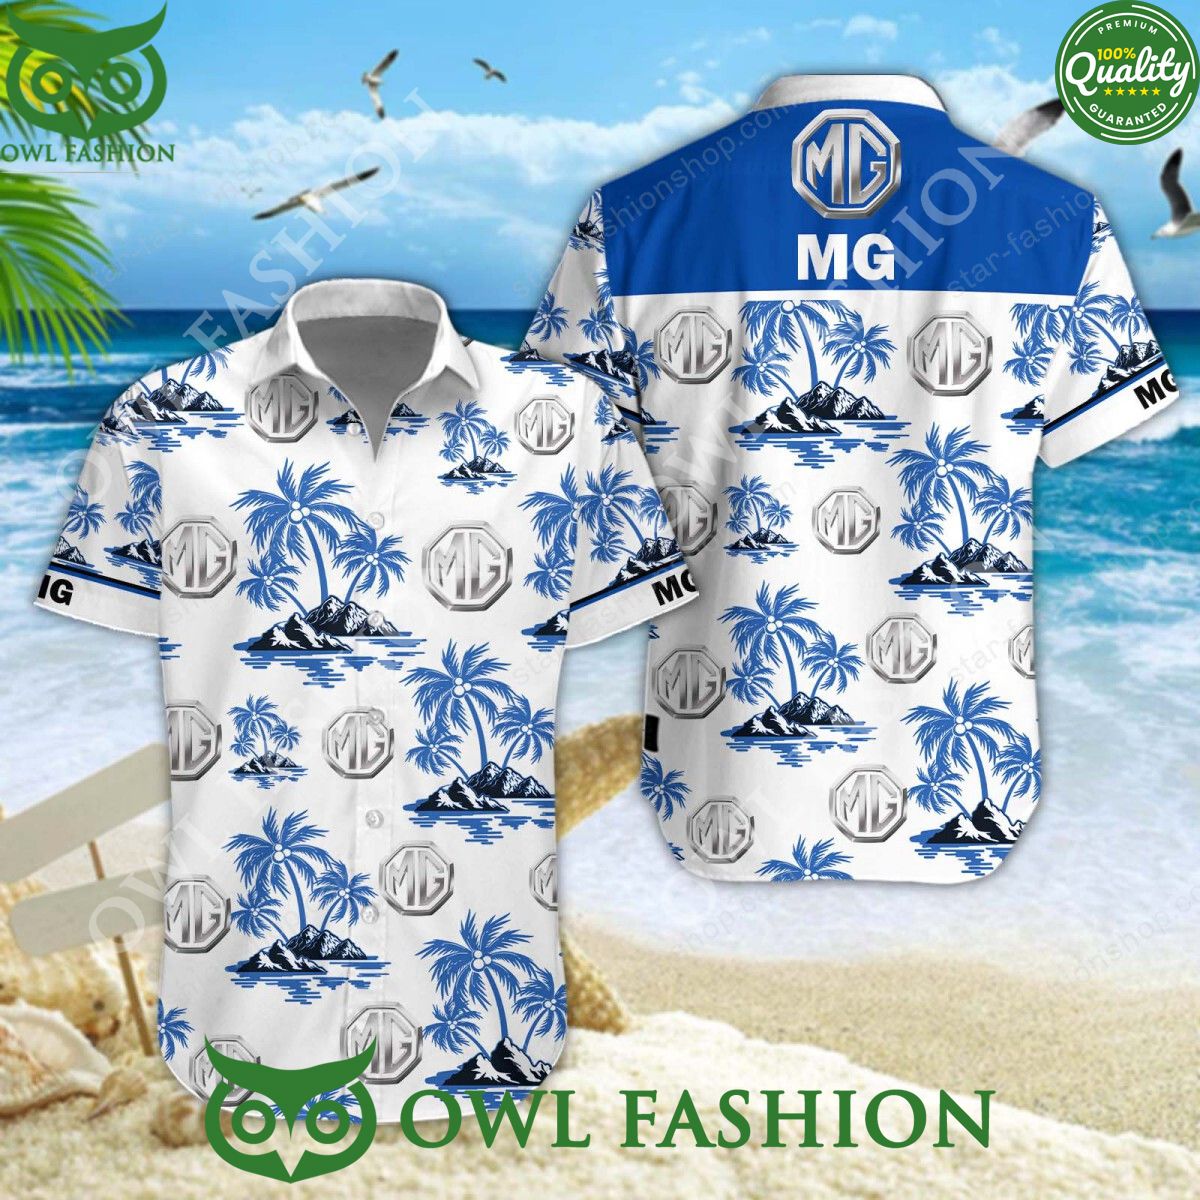 MG Car British Automobile Marque Hawaiian Shirt and Shorts You look too weak